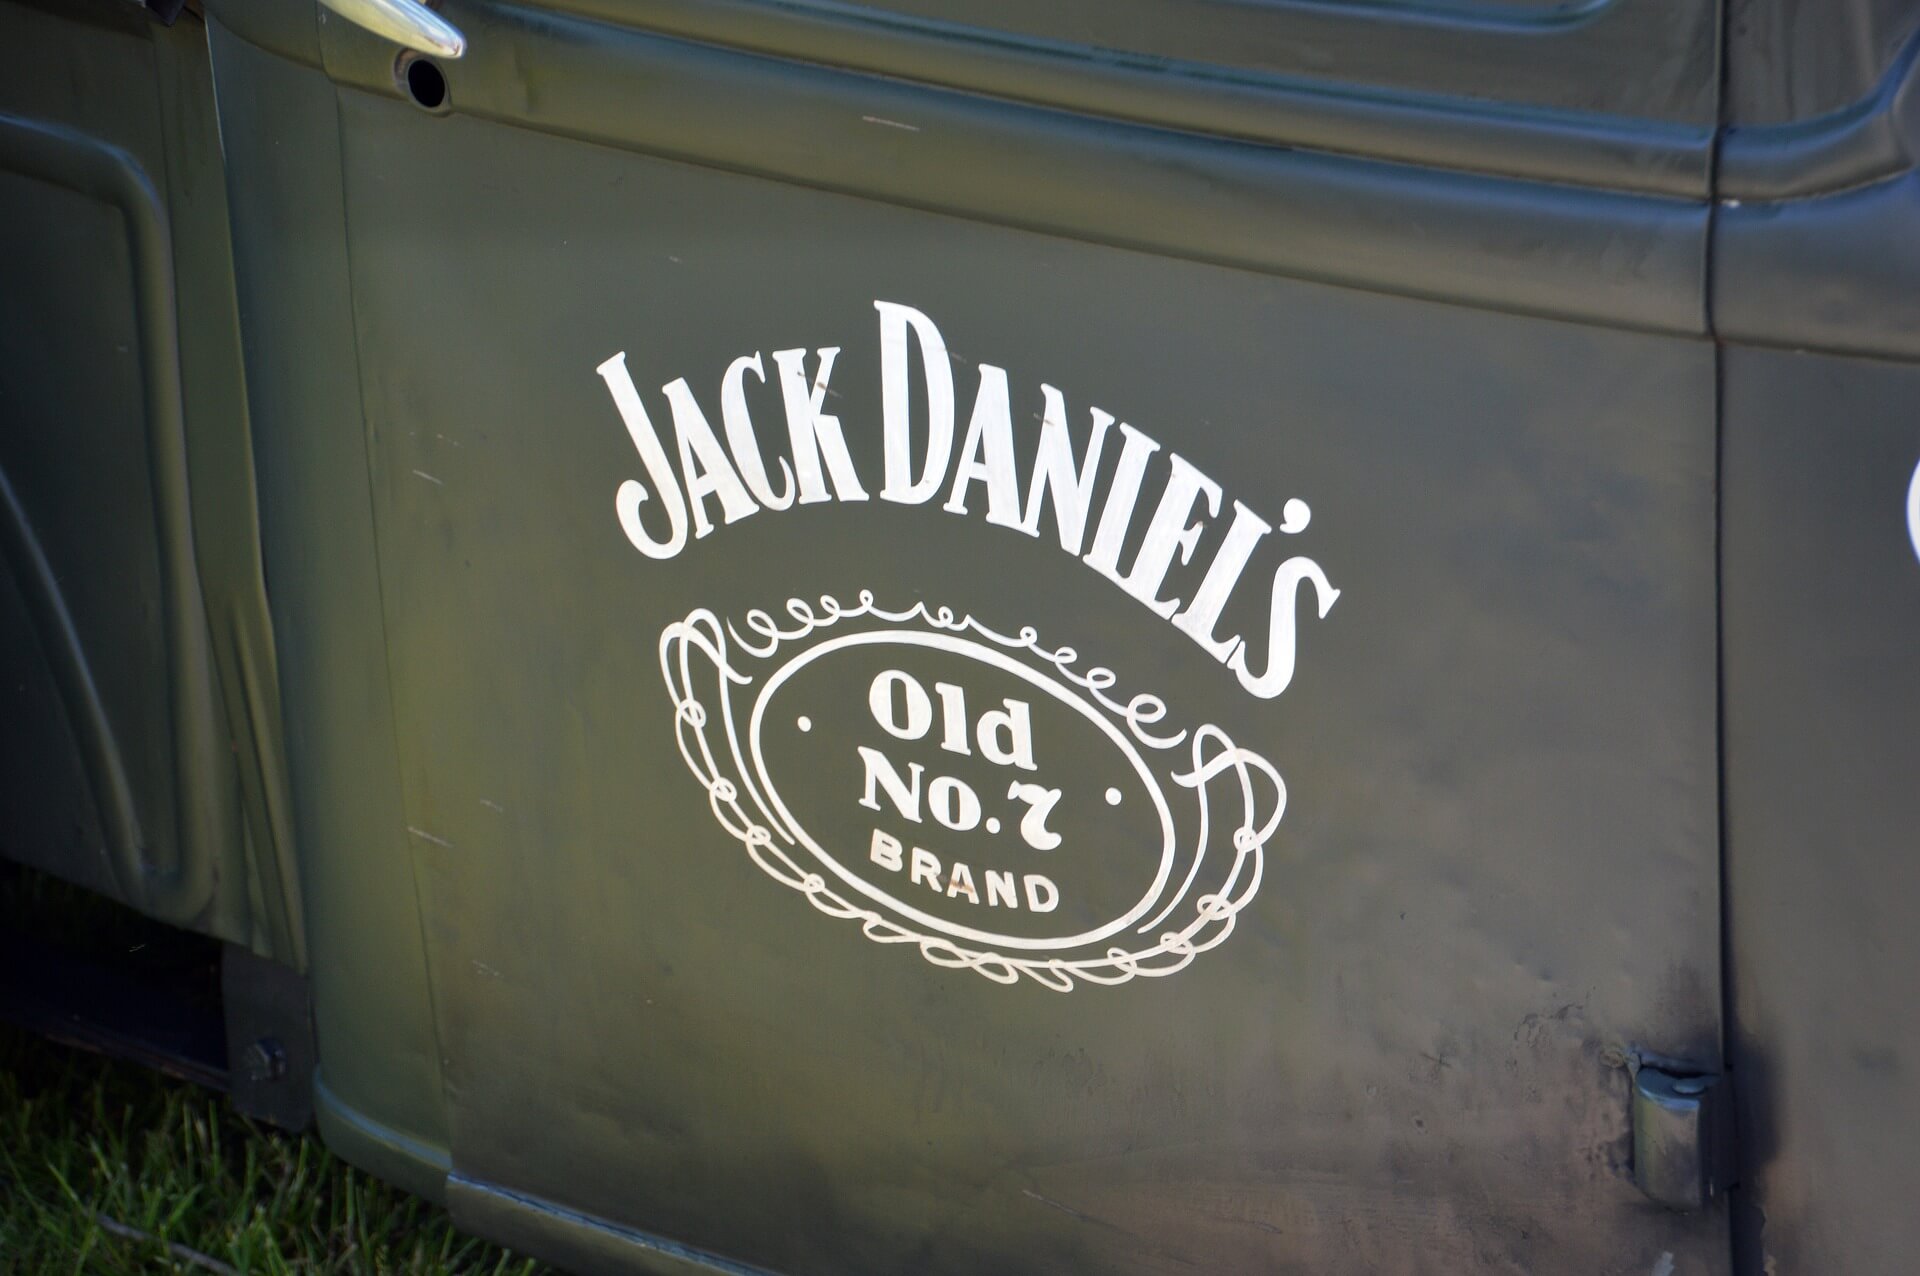 Whisky Jack Daniel's No.27 Gold JACK DANIEL'S